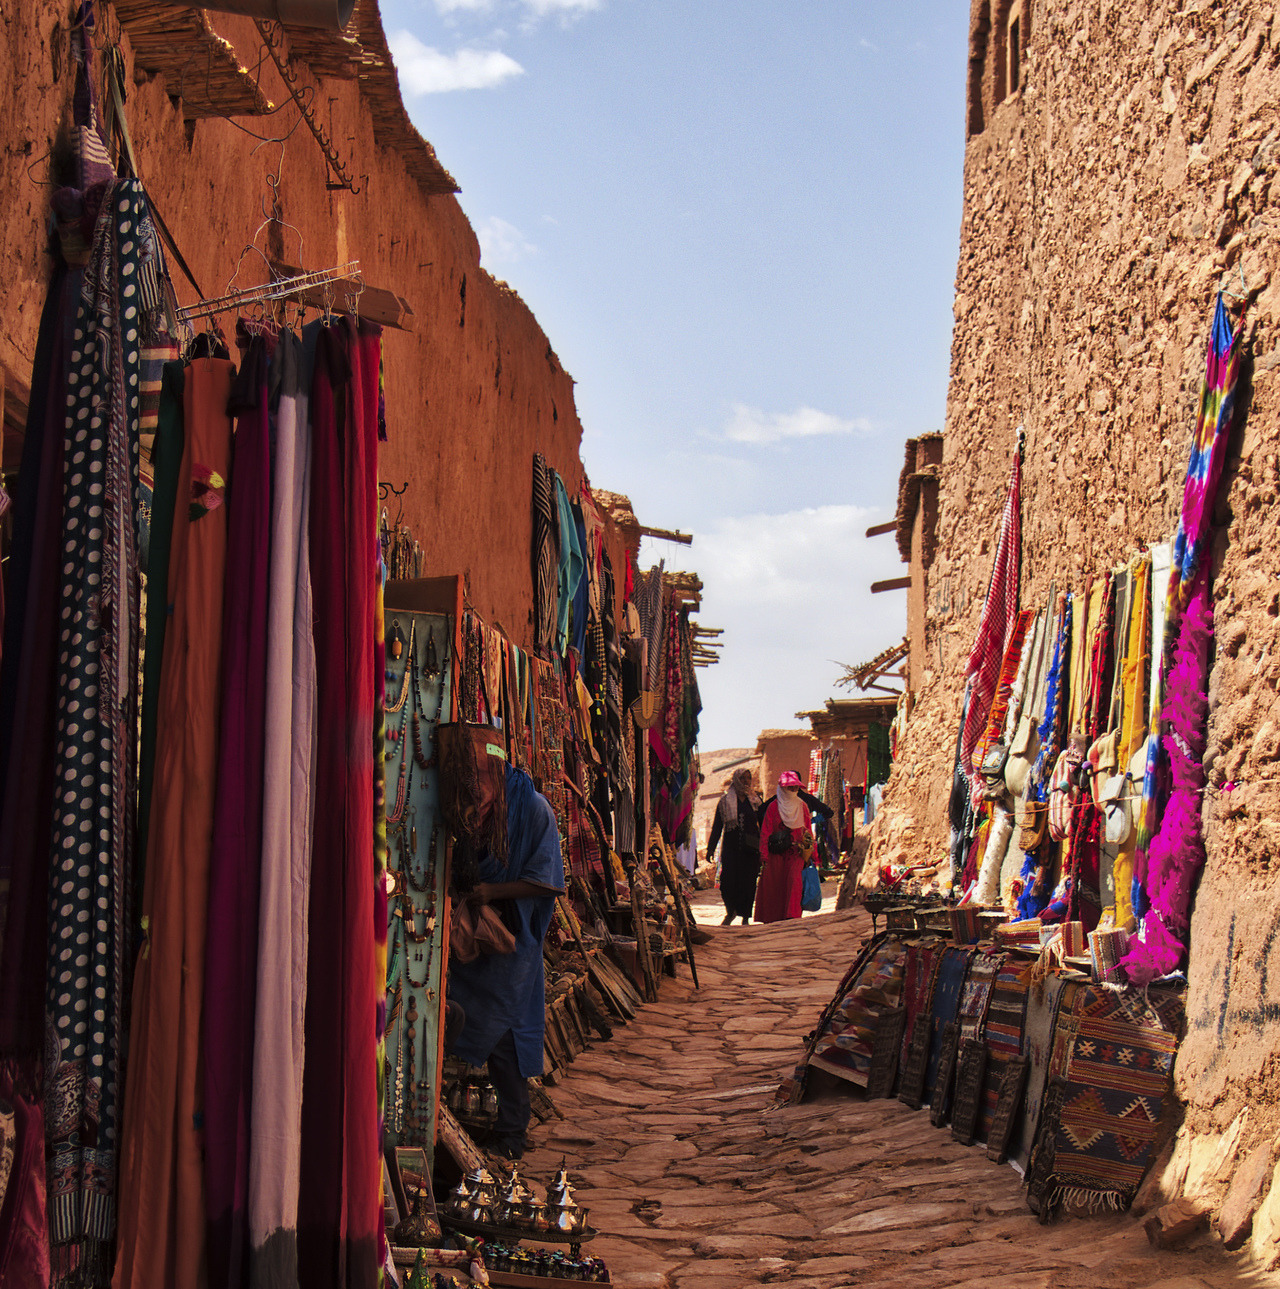 Morocco travel. Бассиф Марокко. Королевство Марокко. Марокко Абониза. Ткшейто в Марокко.